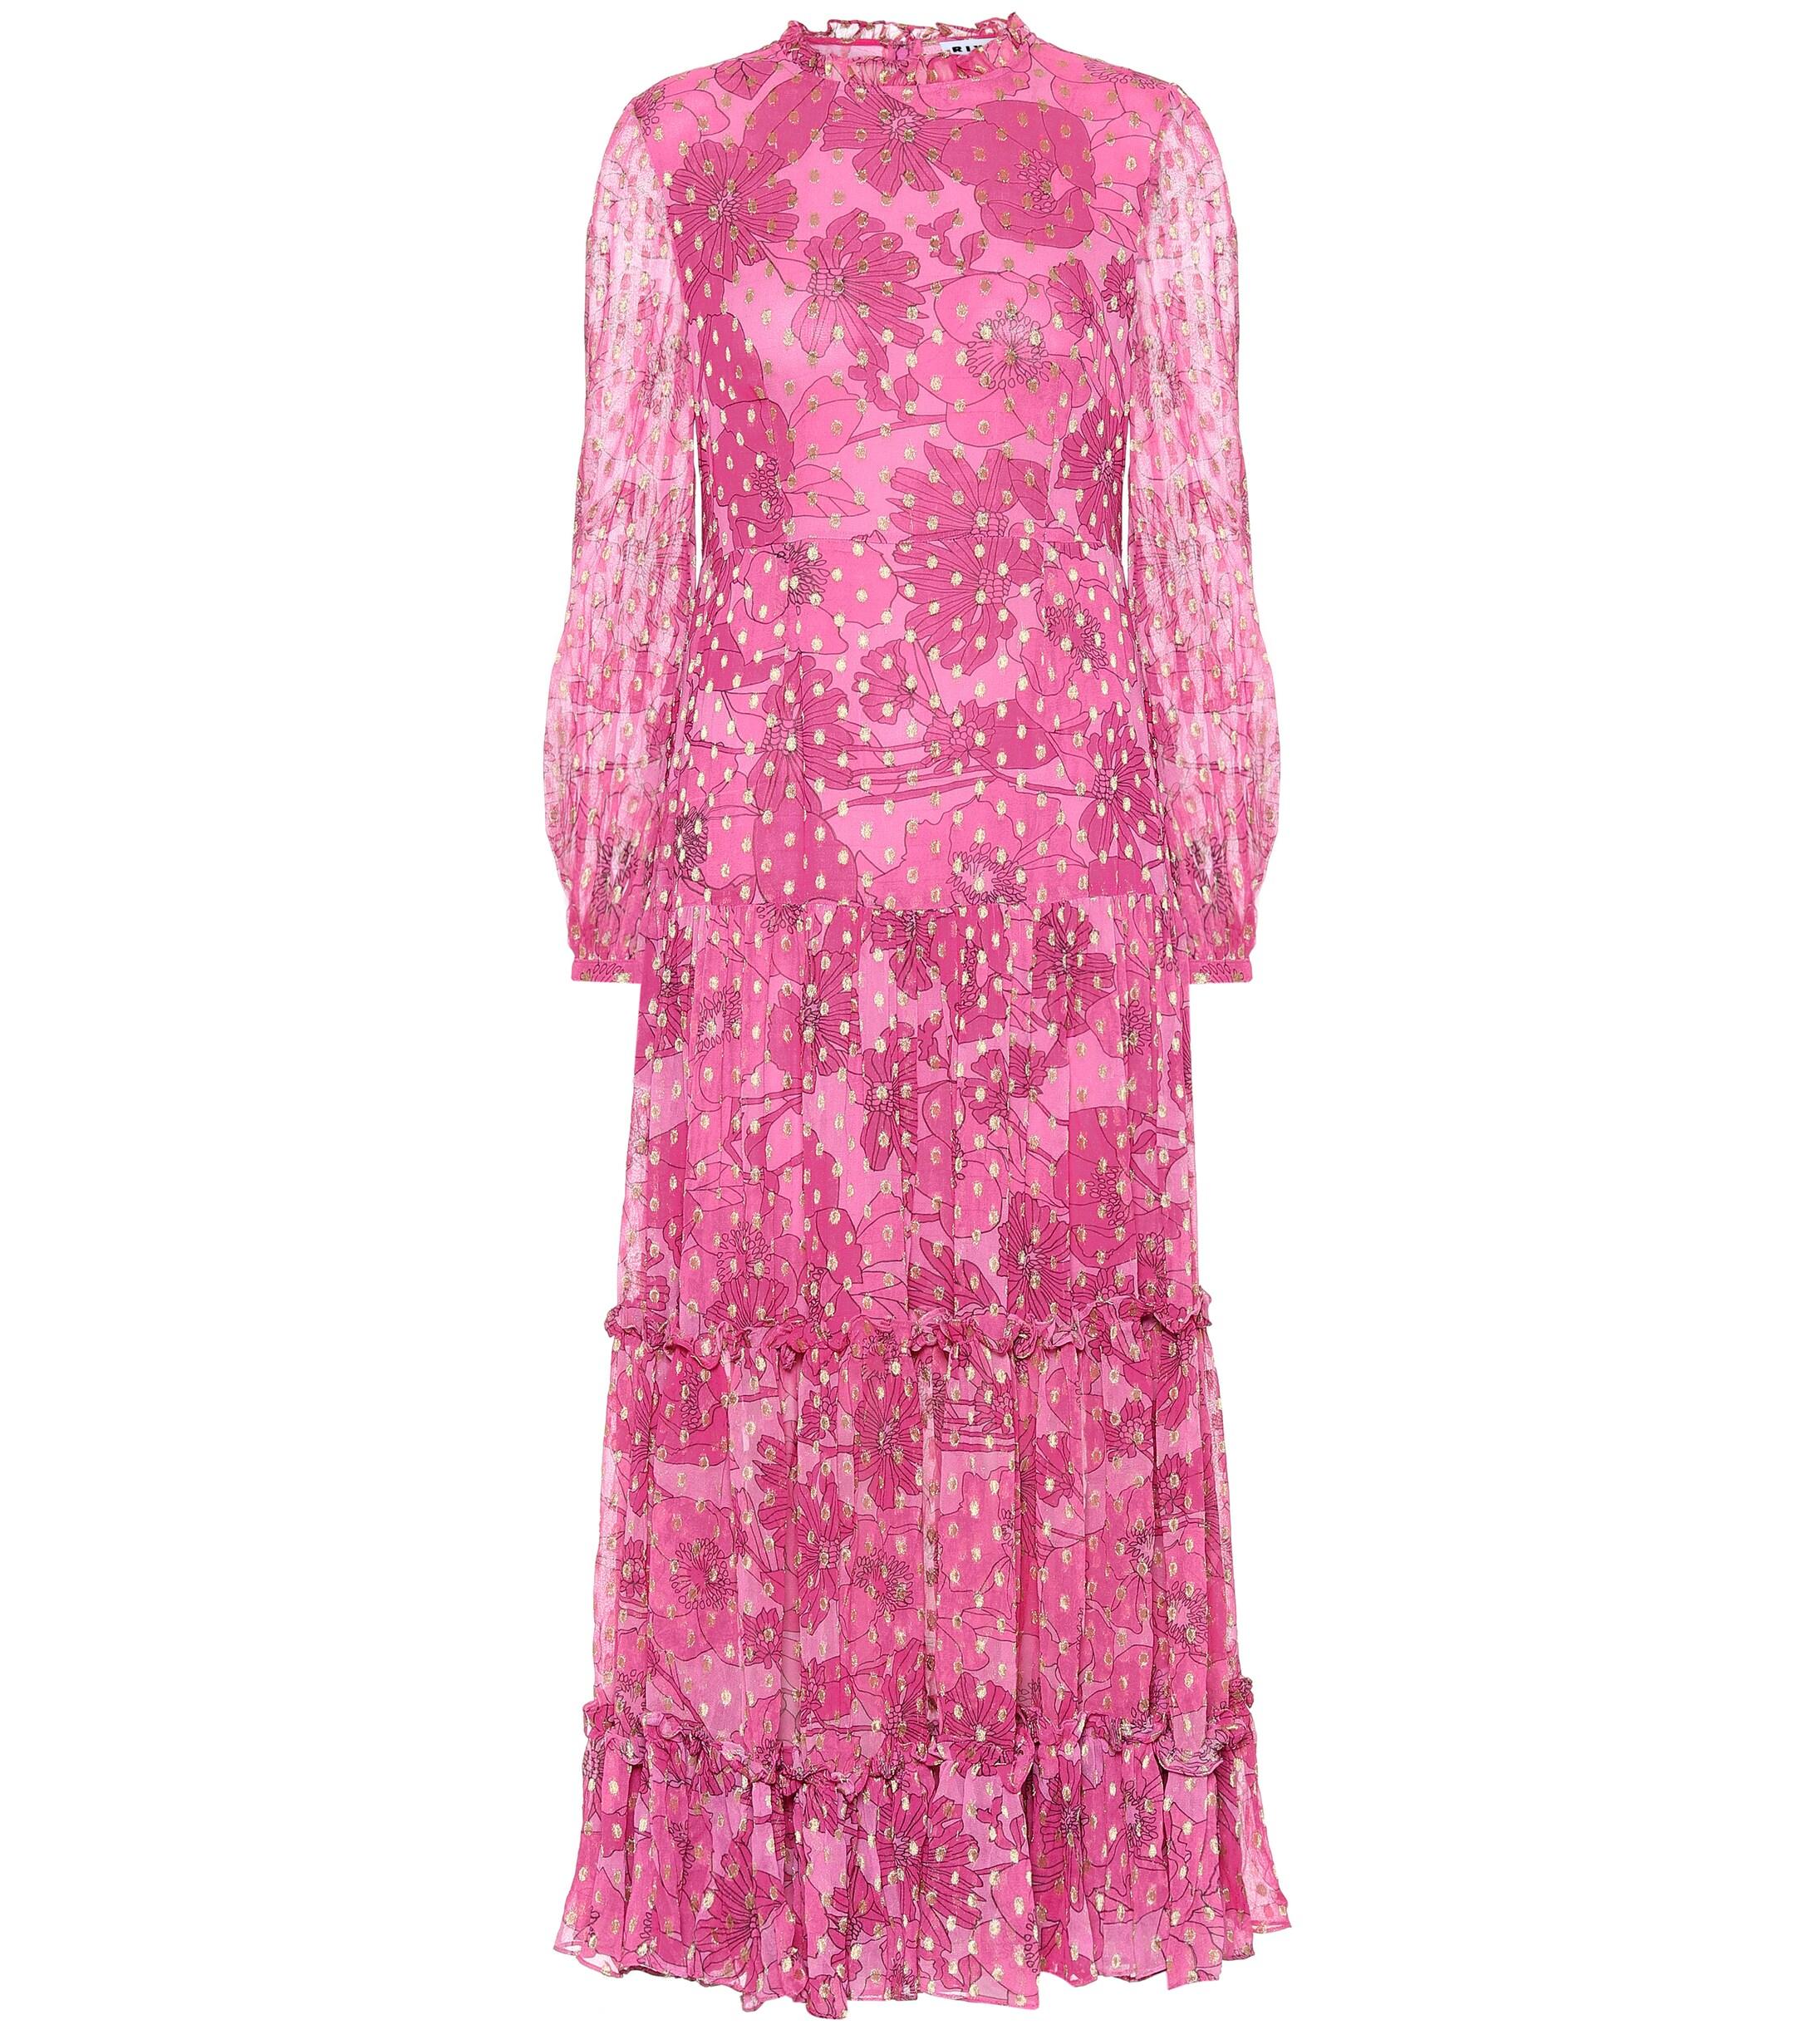 RIXO London Becky Floral Midi Dress in Pink - Lyst